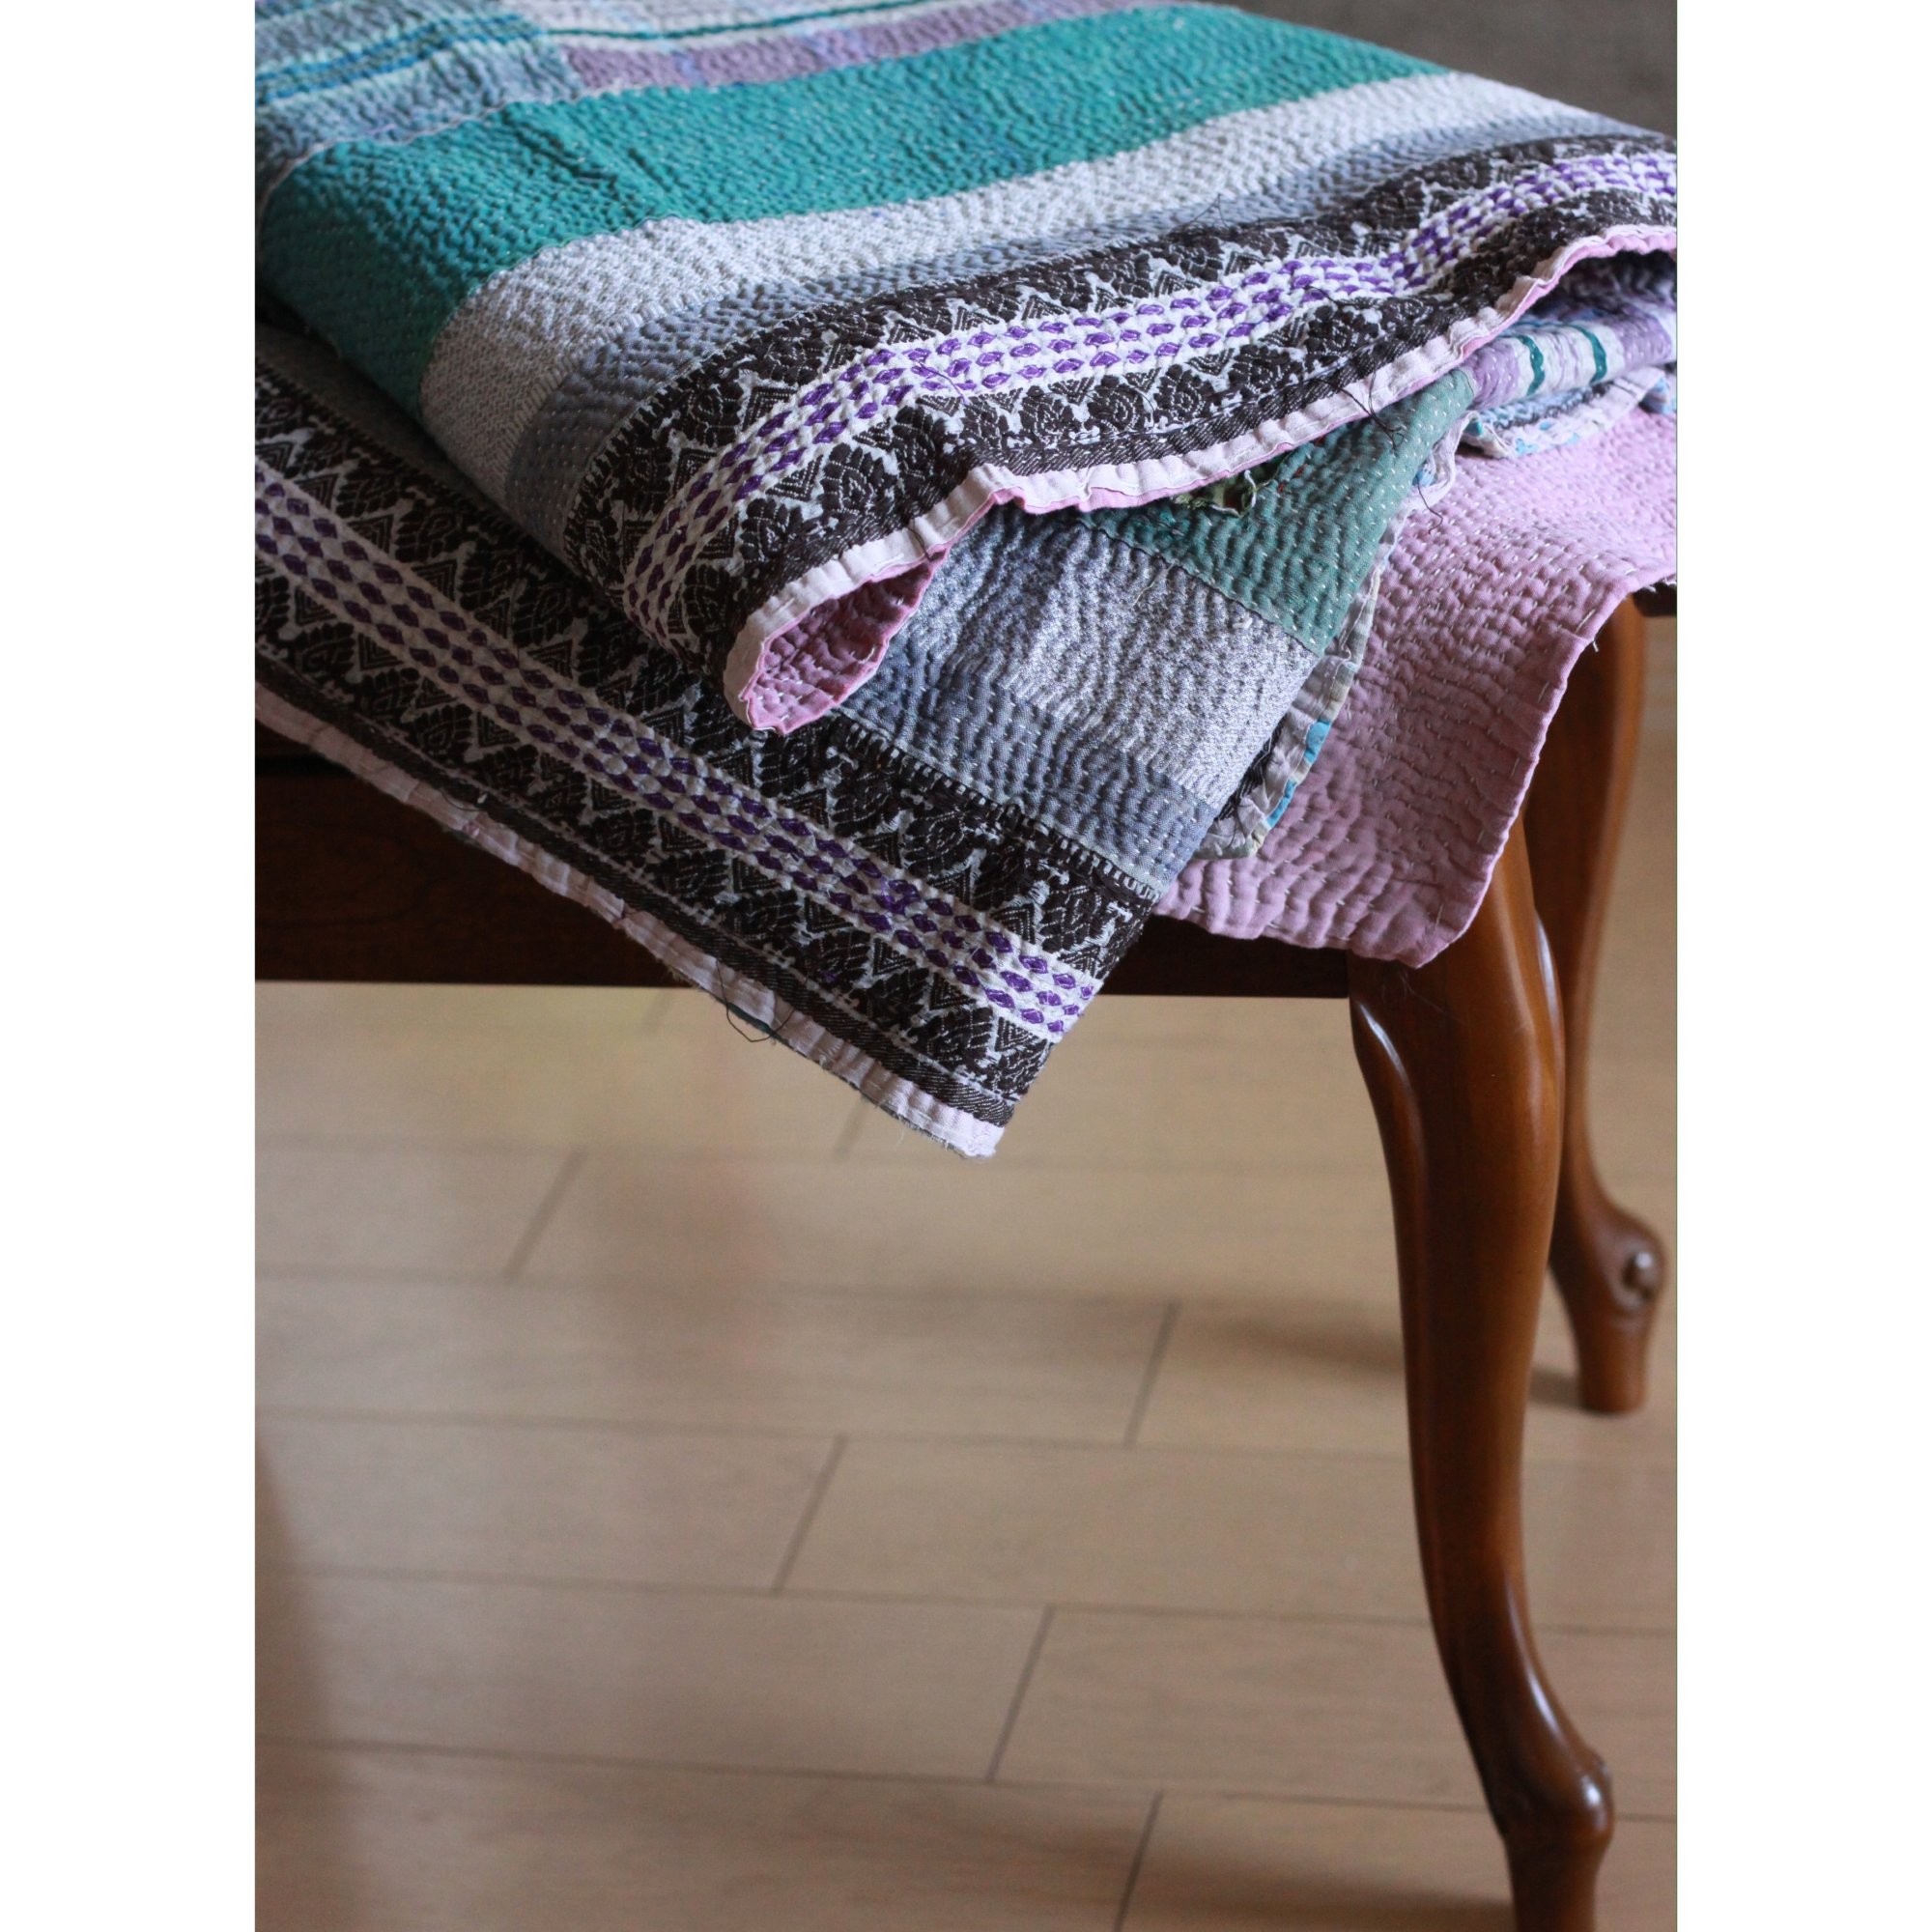 Vintage Kantha Quilt　200×136, - カンタキルト ラリーキルト インド刺繍キルト通販専門店 【A Little Fable】